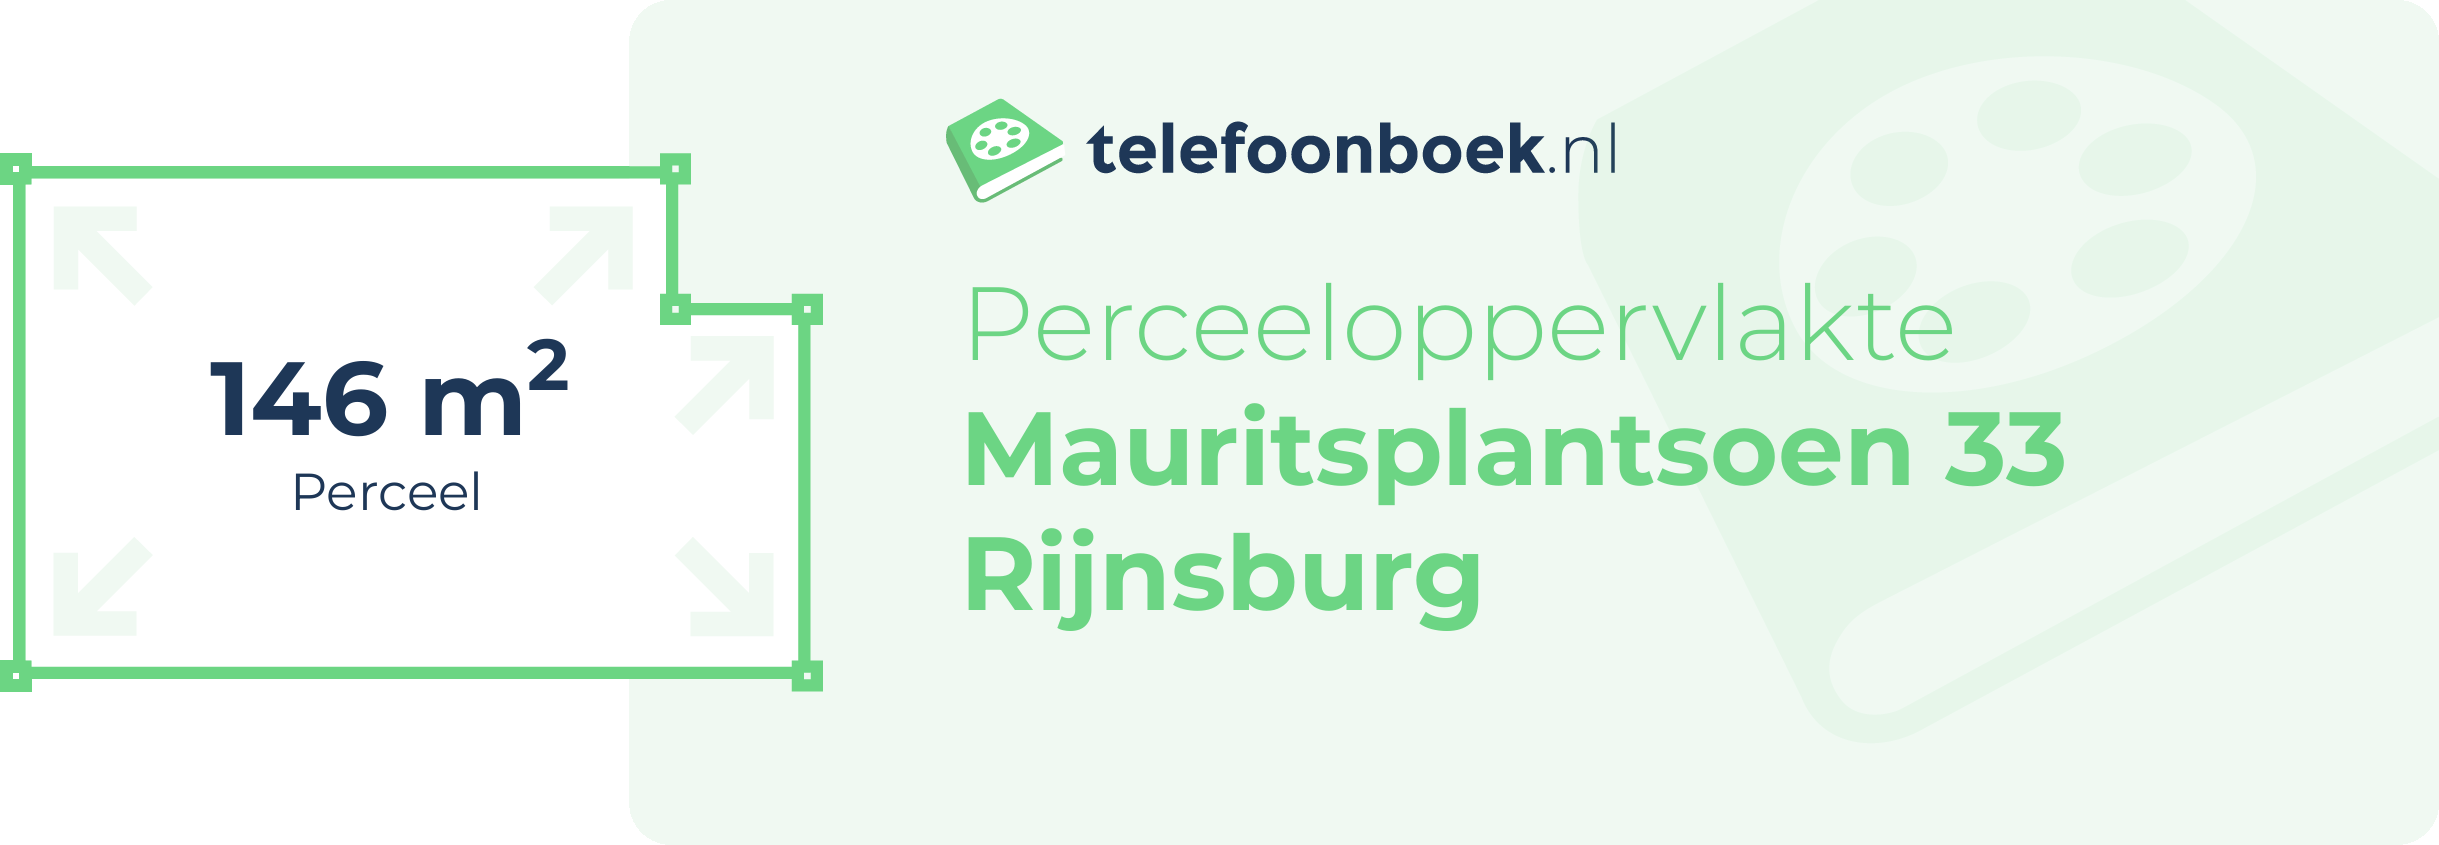 Perceeloppervlakte Mauritsplantsoen 33 Rijnsburg